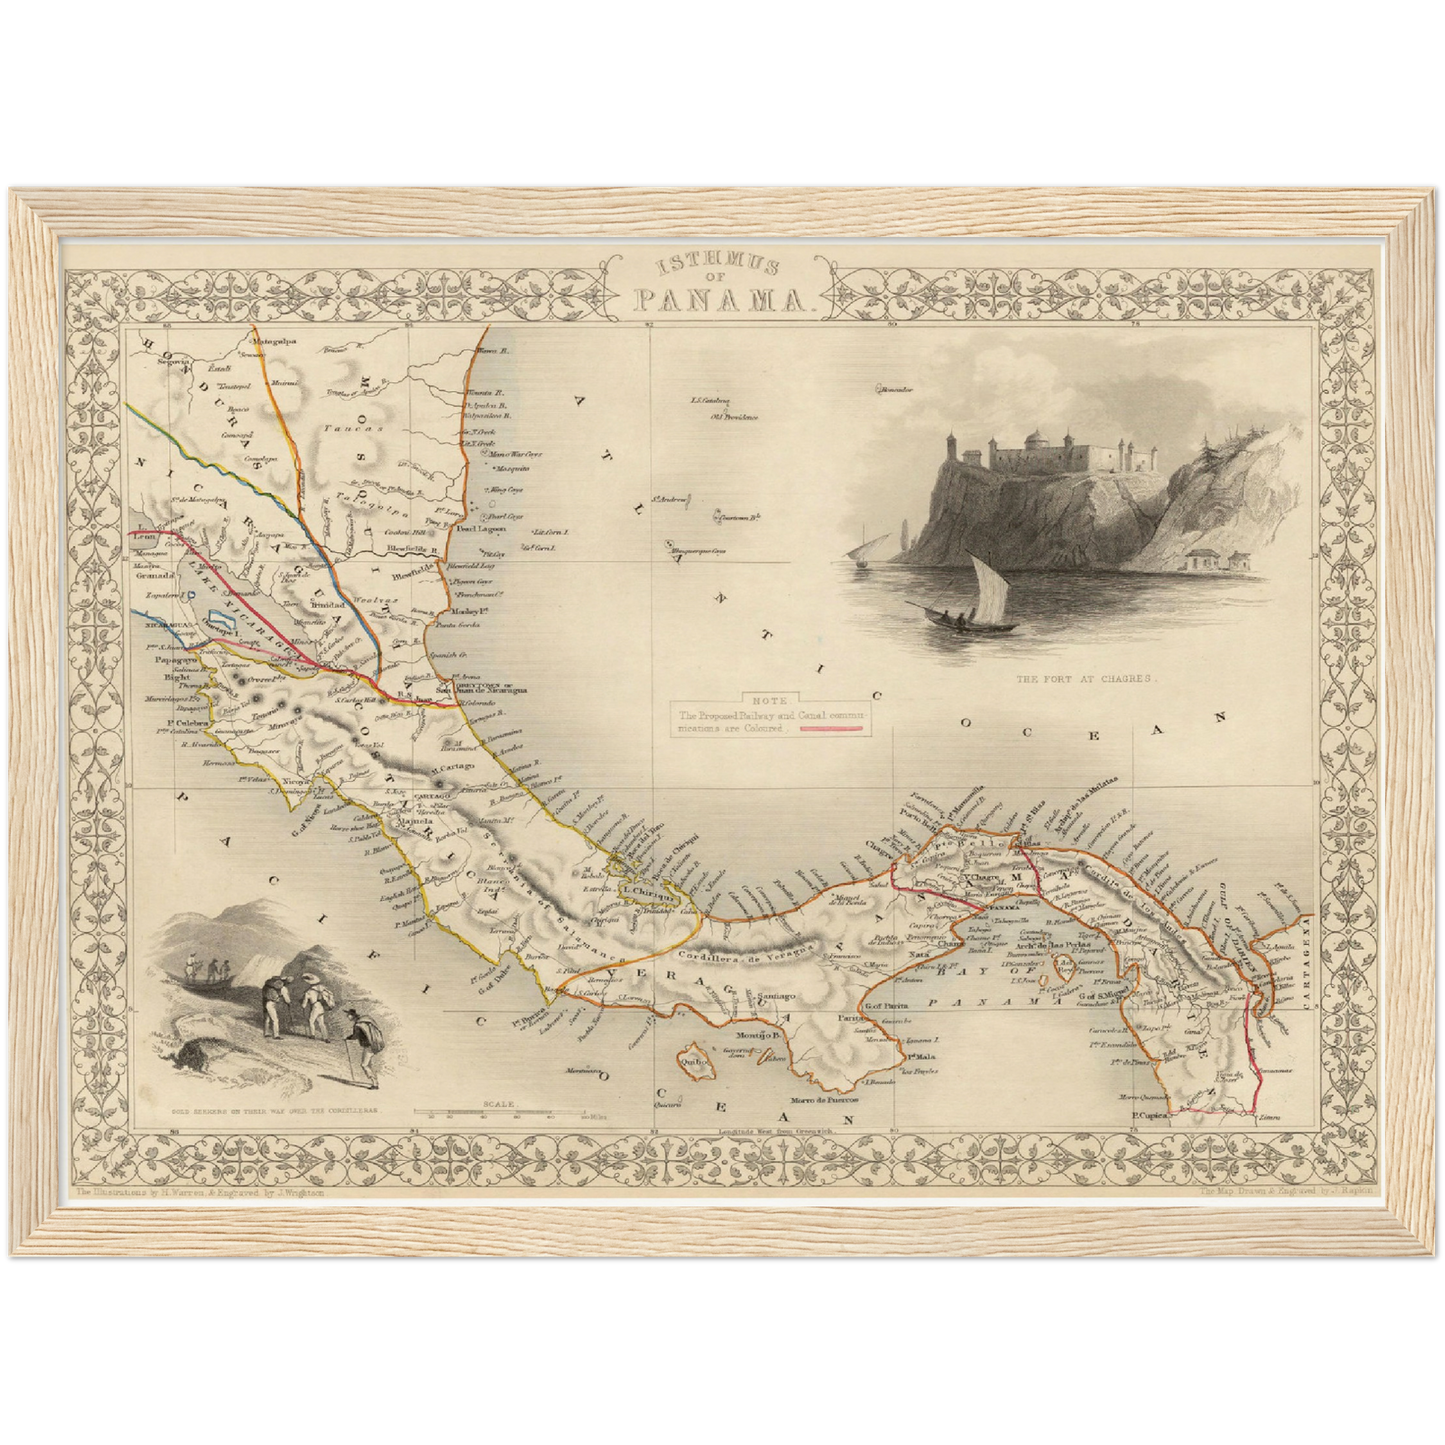 Historische Landkarte Panama um 1850